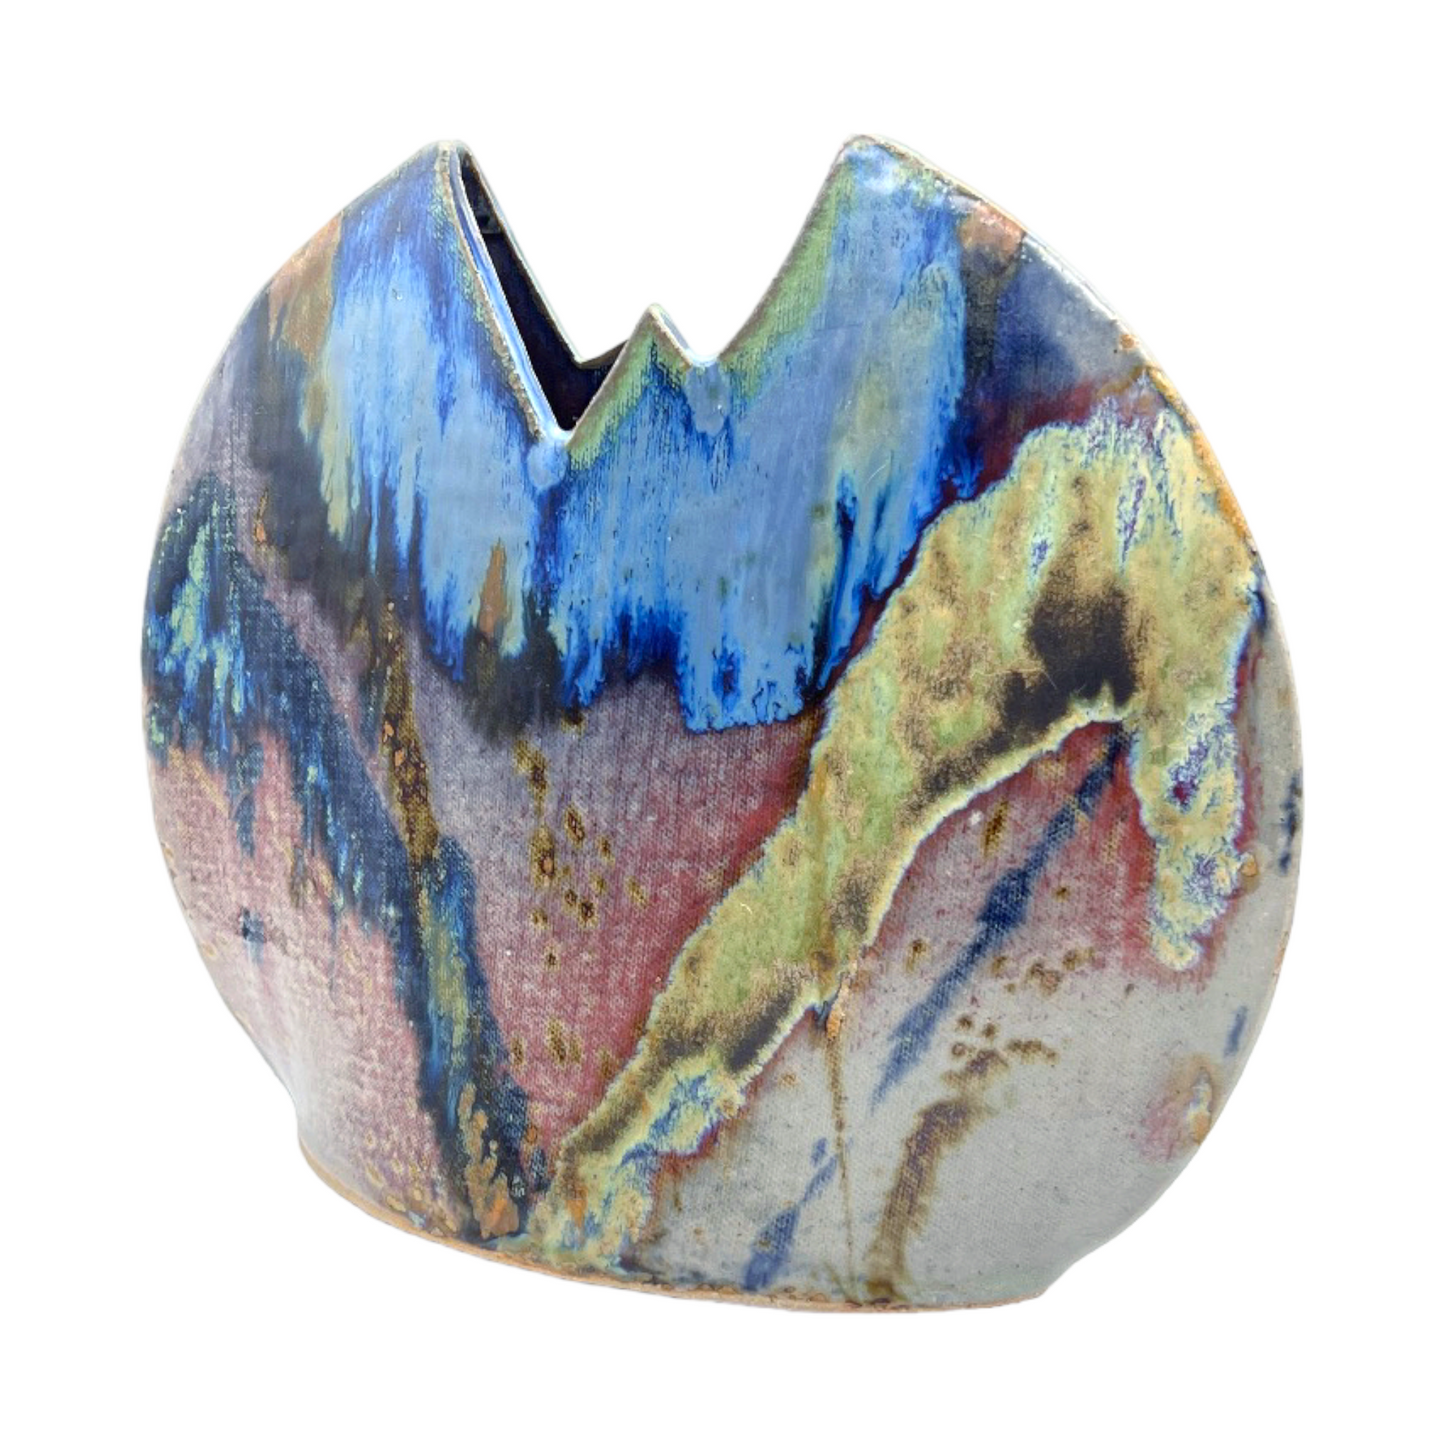 Jim Lauer Studio Pottery - Circle Jagged Top Vase - 8.5"